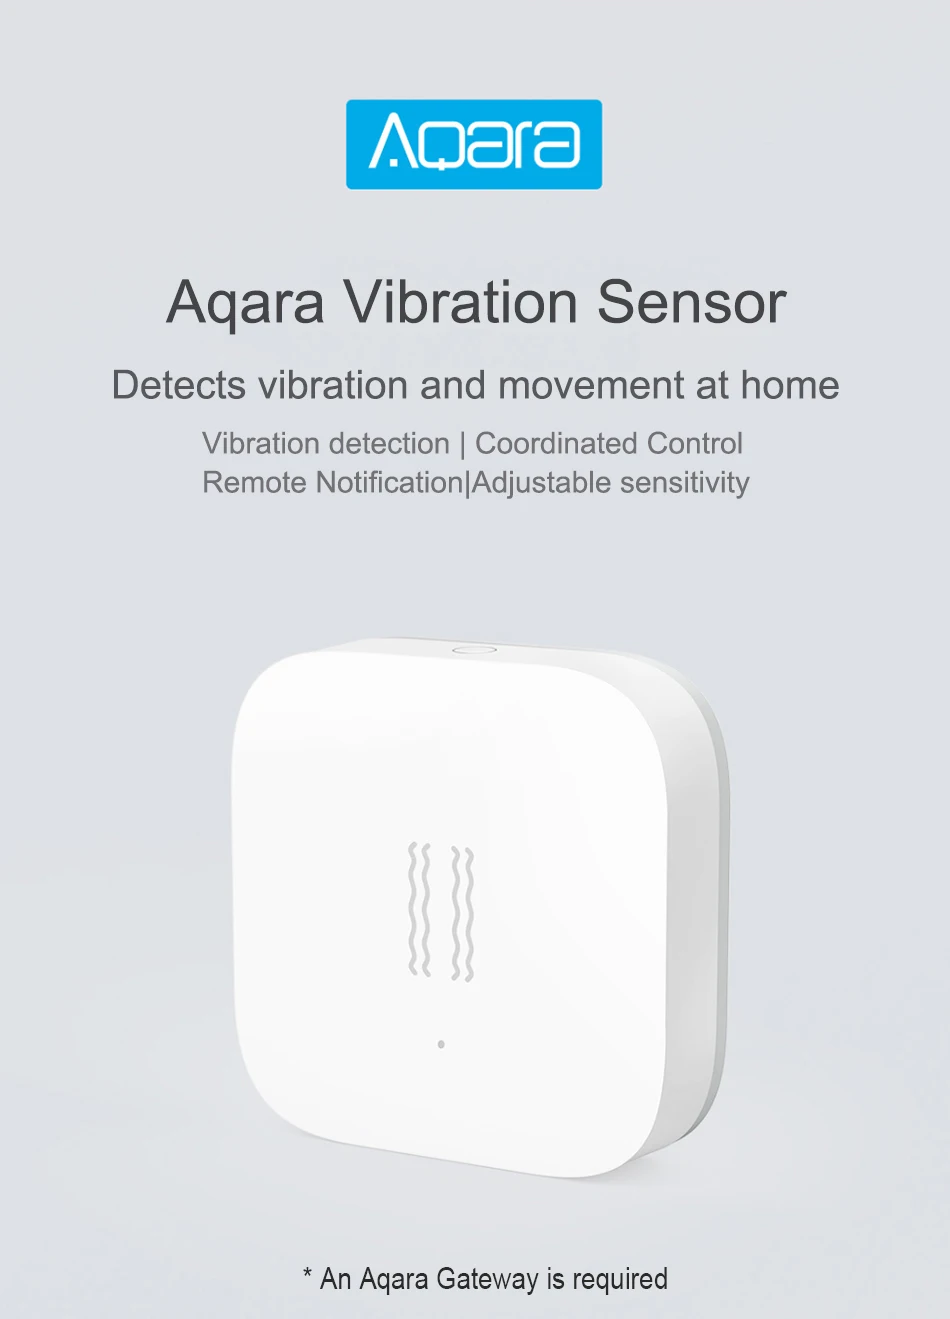 Xiaomi Aqara Вибрация Sensorsmart аксессуары для дома обнаруживает вибрацию и движение дома работа с Xiaomi Aqara HUb gateway 3